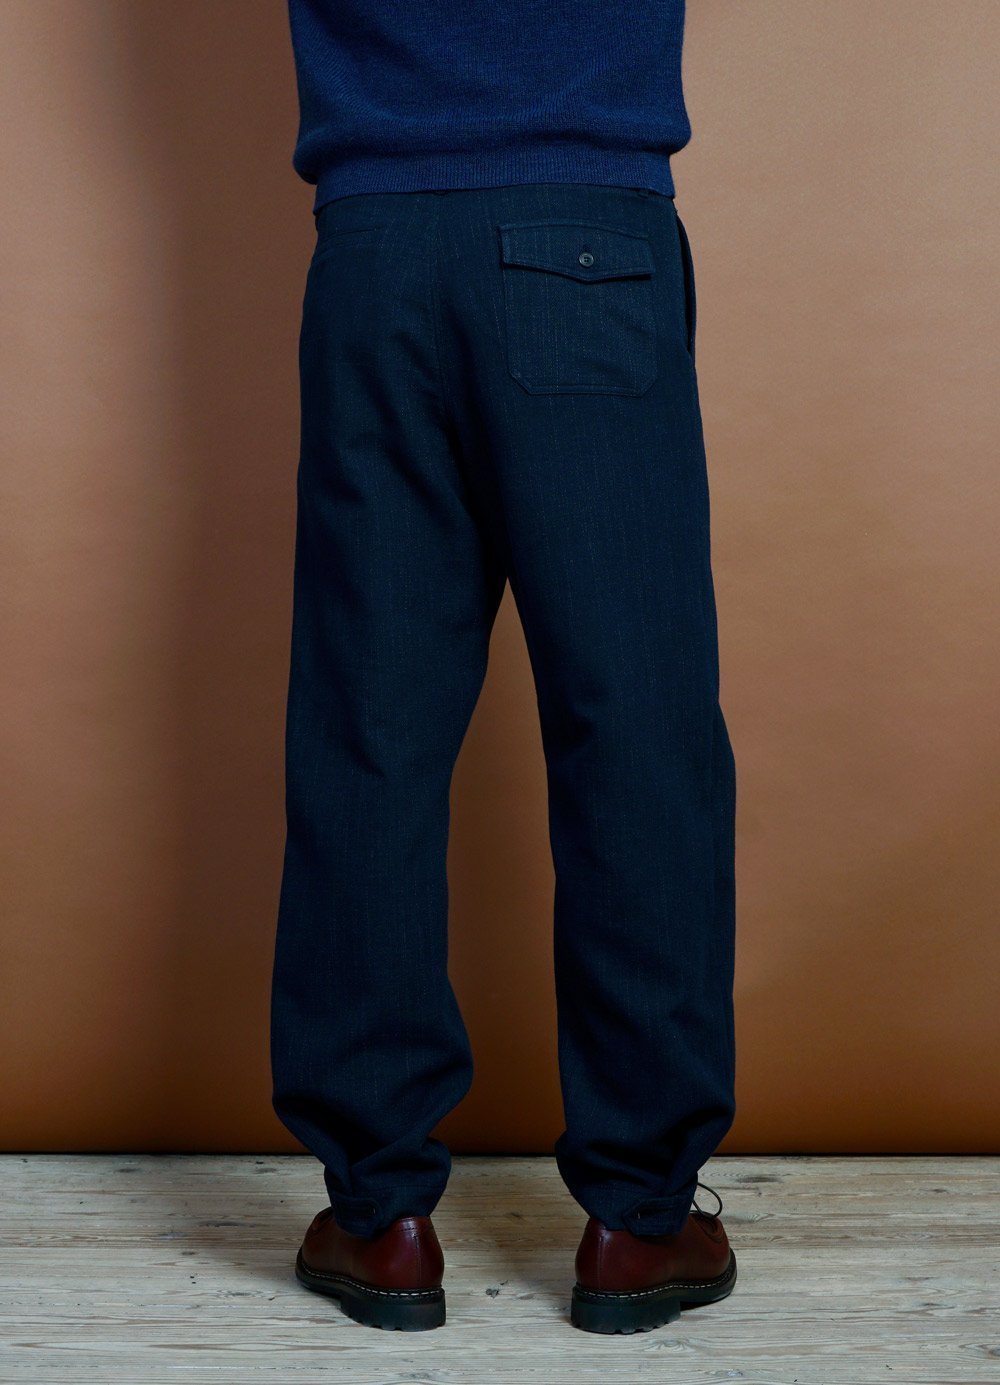 HANSEN Garments - TROND | Relaxed Everyday Trousers | Navy Melange - HANSEN Garments